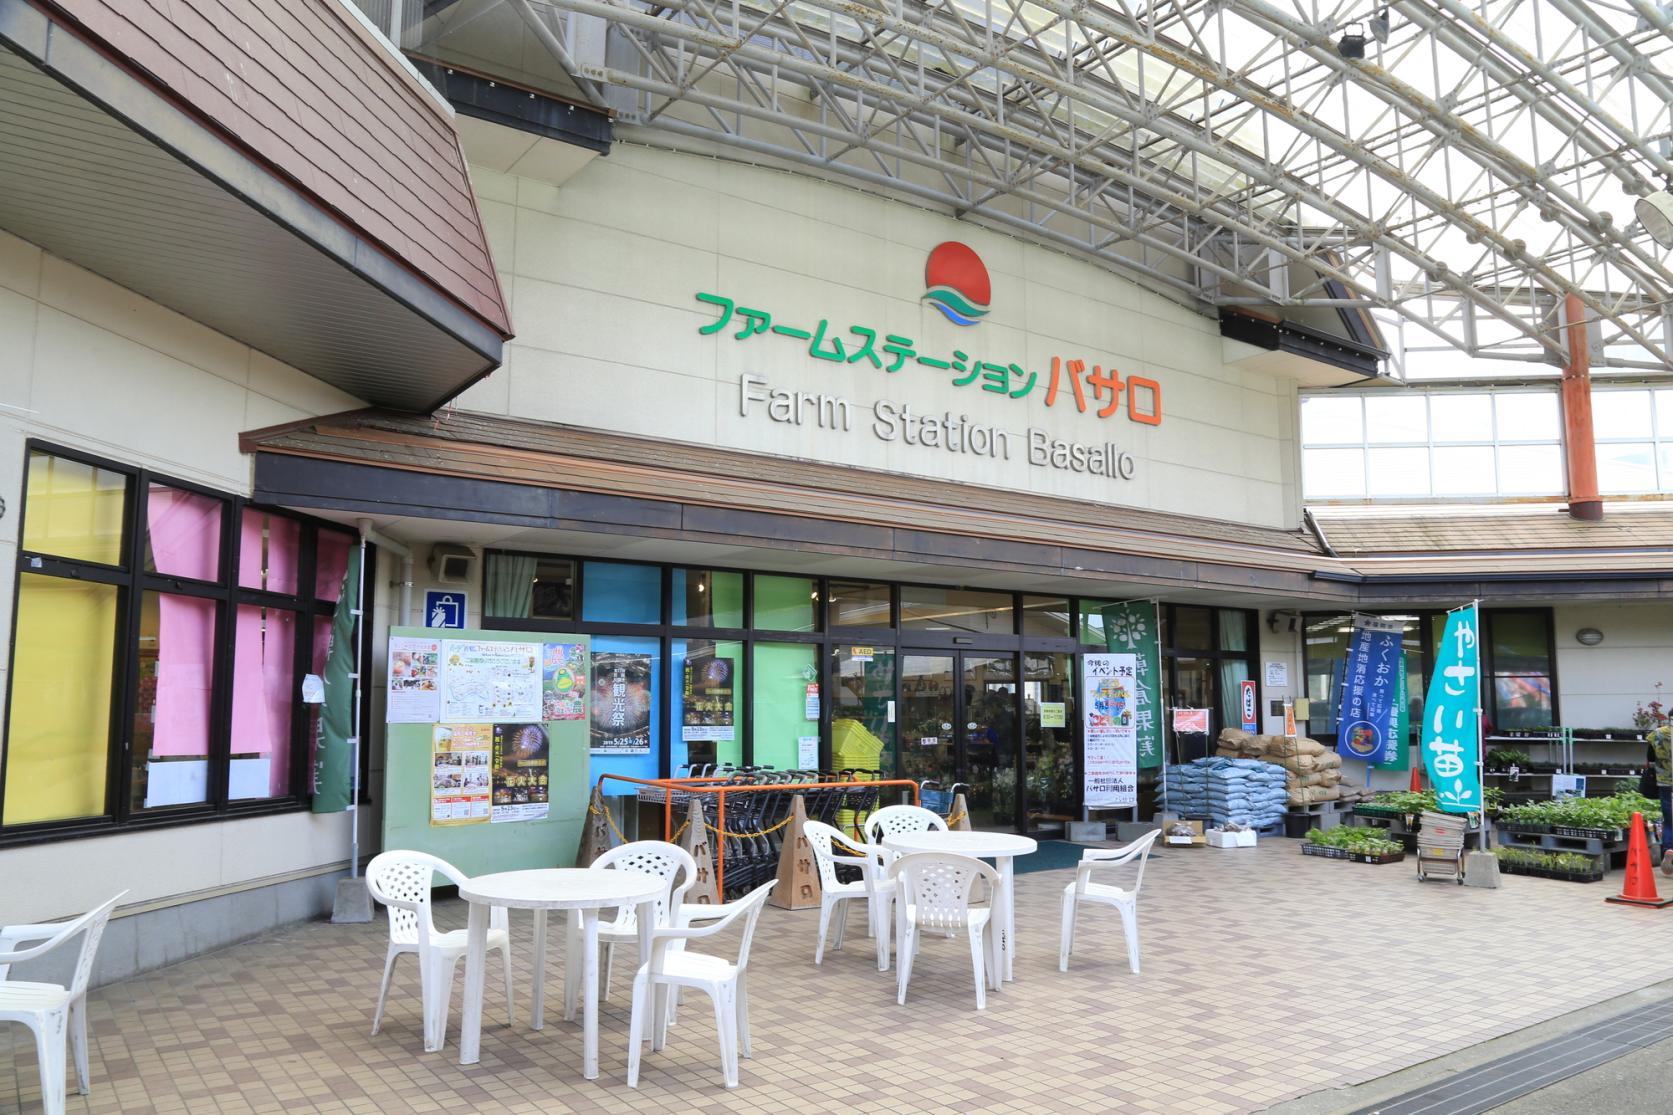 Roadside station 'Harazuru' Farm Station Basallo-2